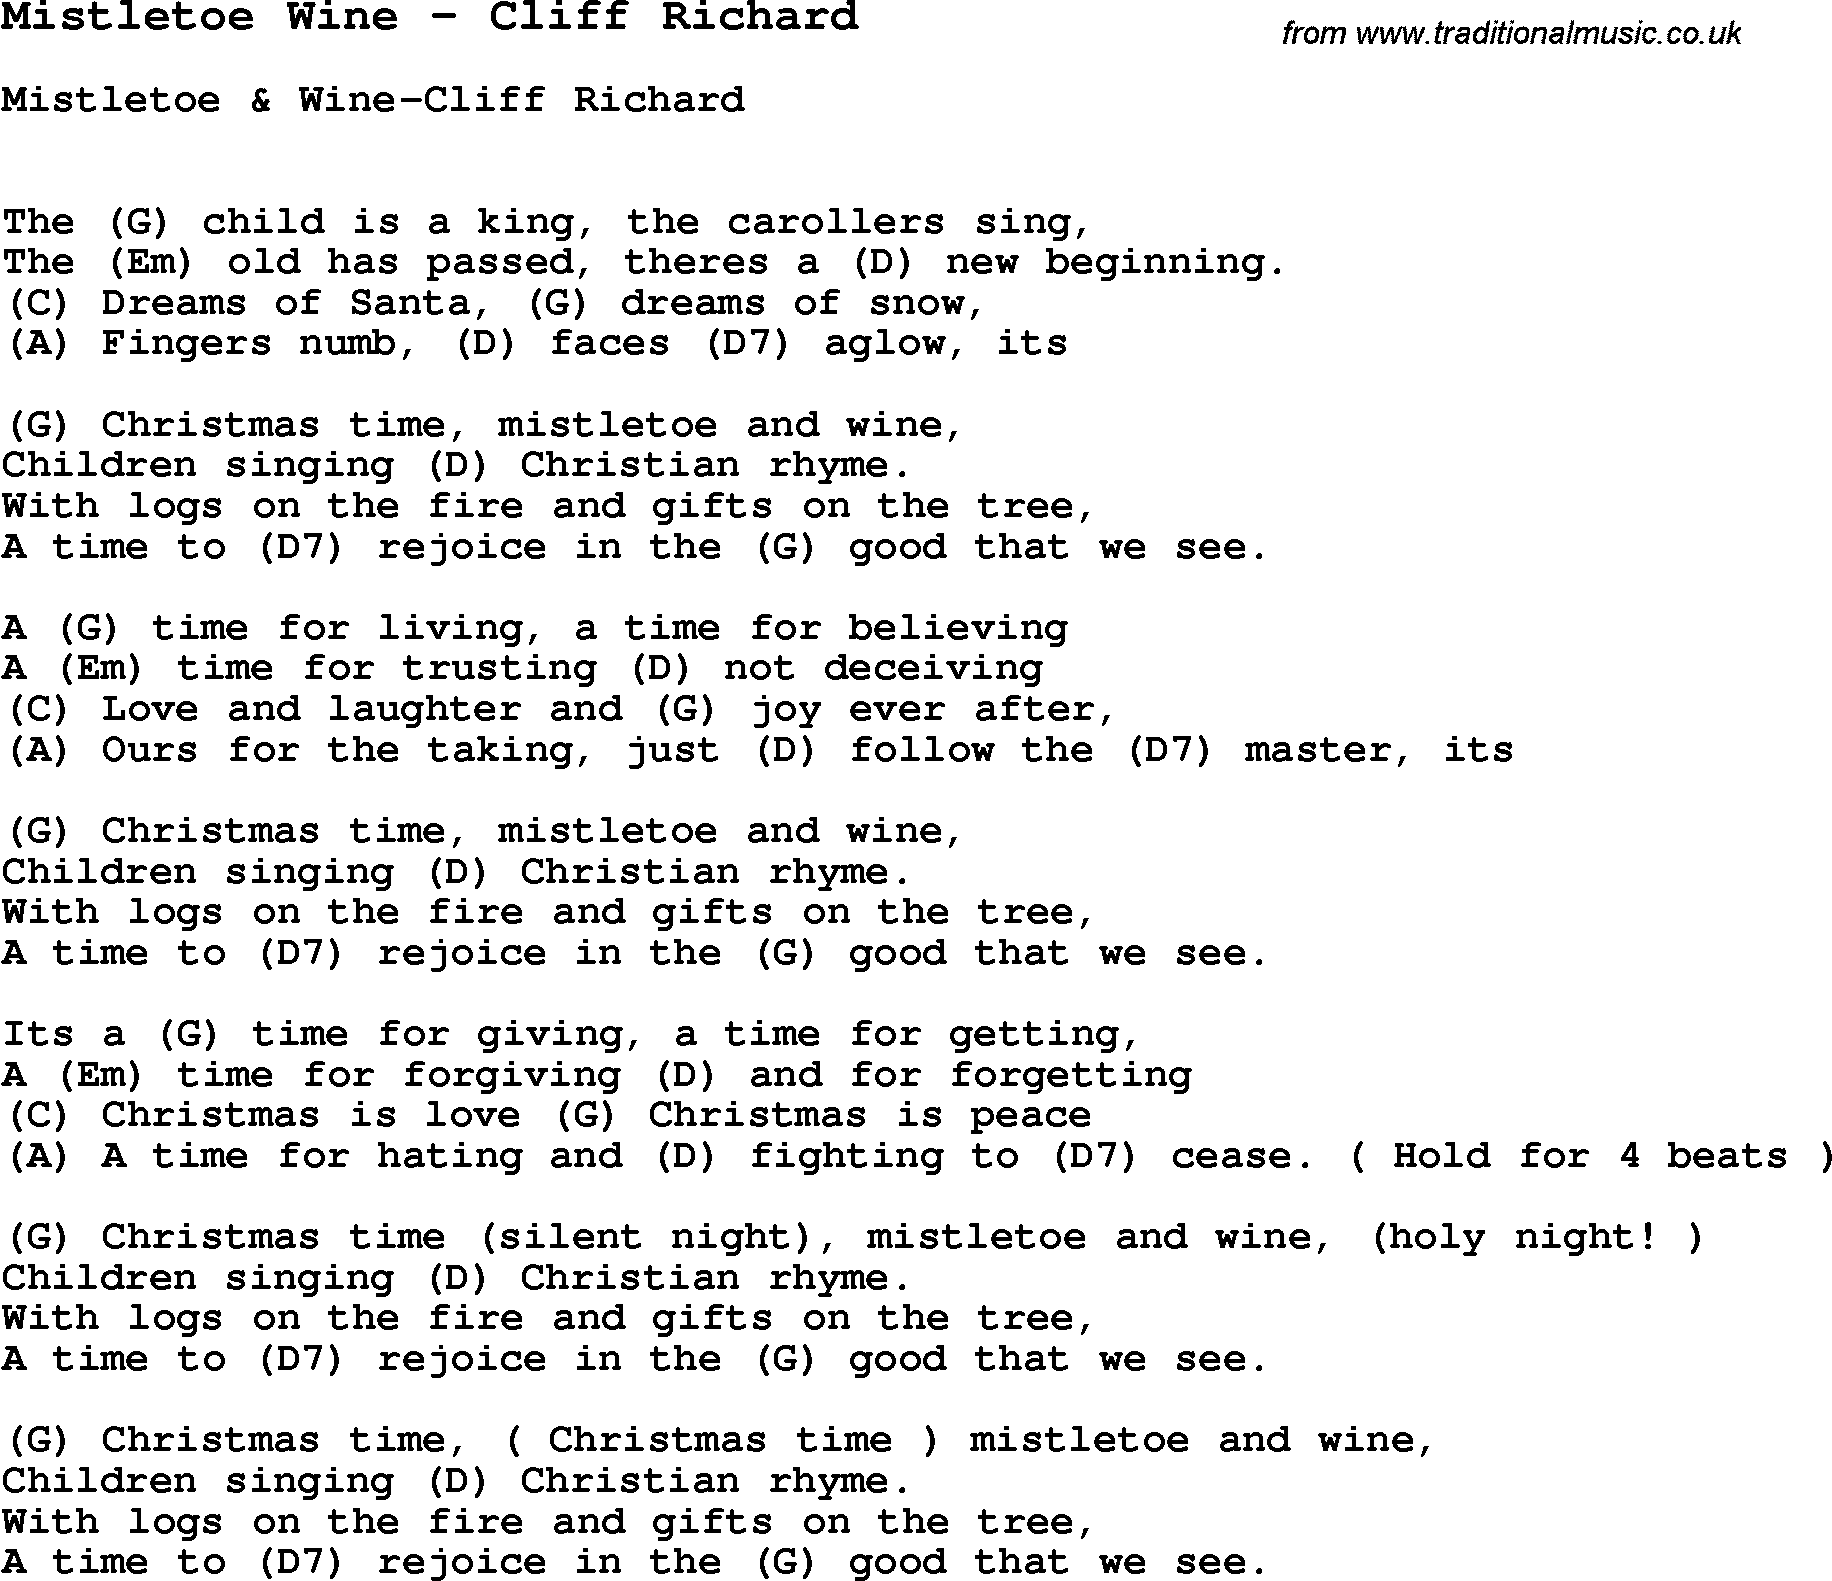 Song Mistletoe Wine by Cliff Richard, with lyrics for vocal performance and accompaniment chords for Ukulele, Guitar Banjo etc.